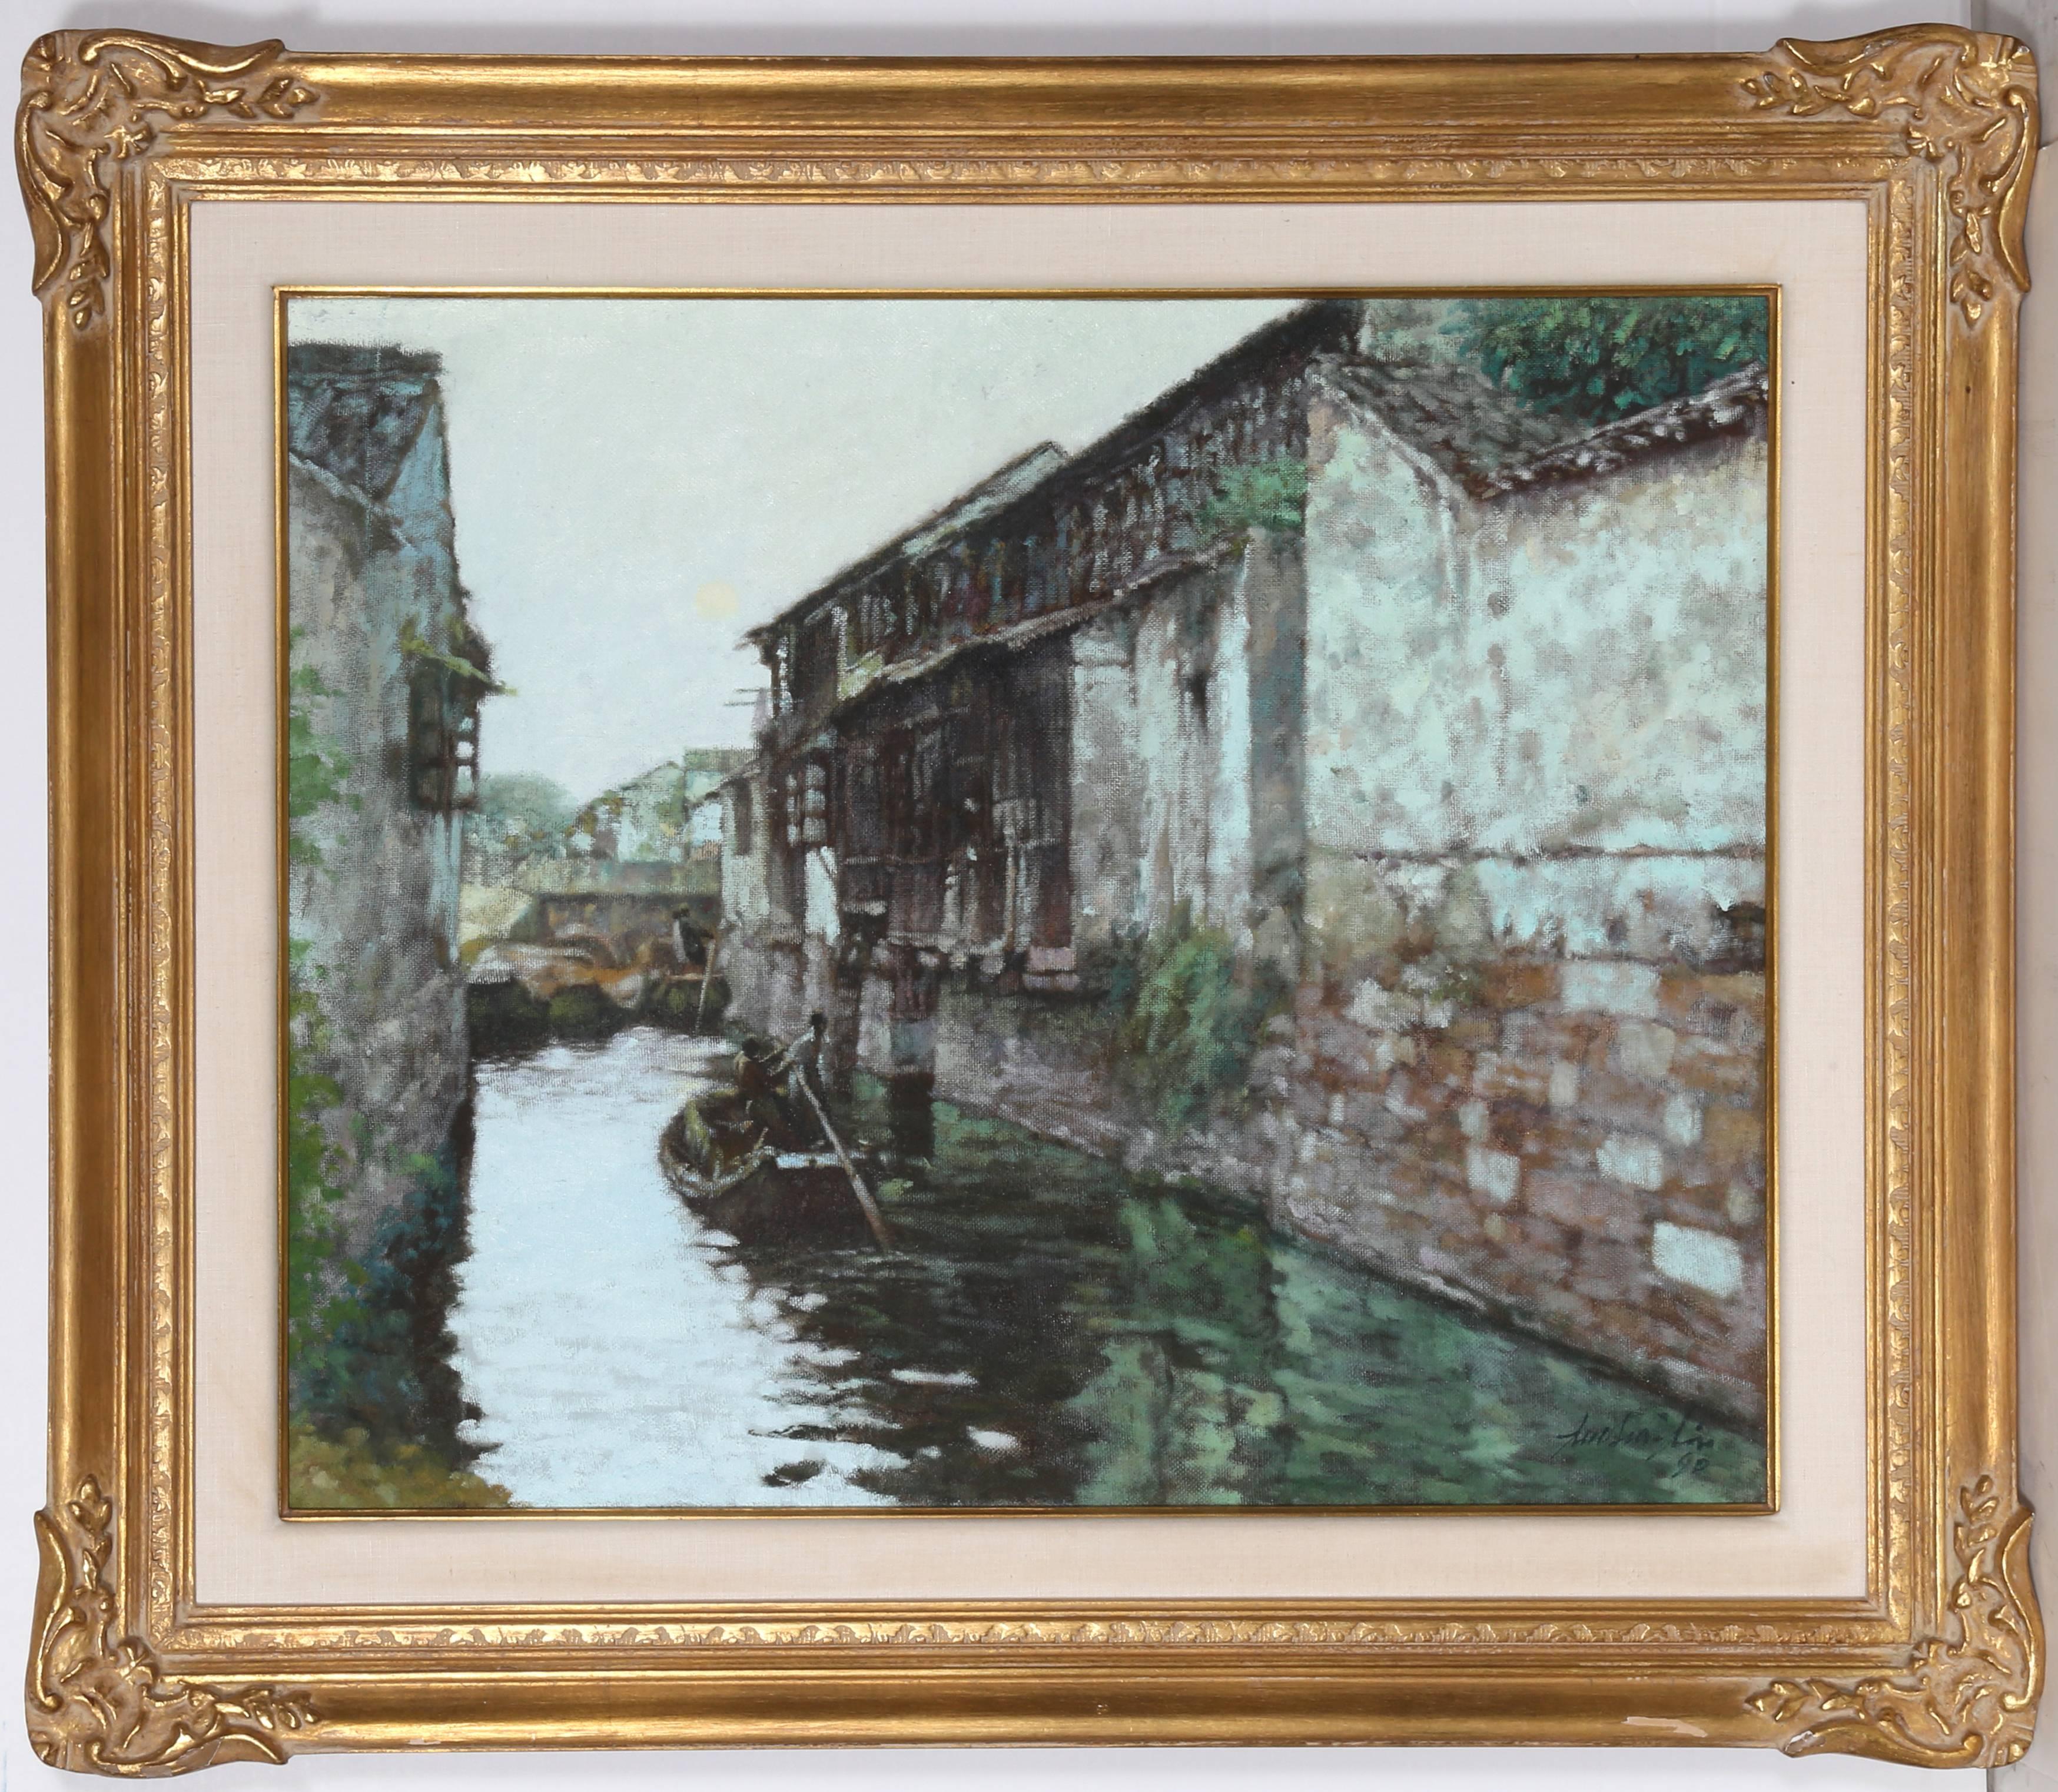 Xue Jian Xin Landscape Painting - Boat in Village Canal